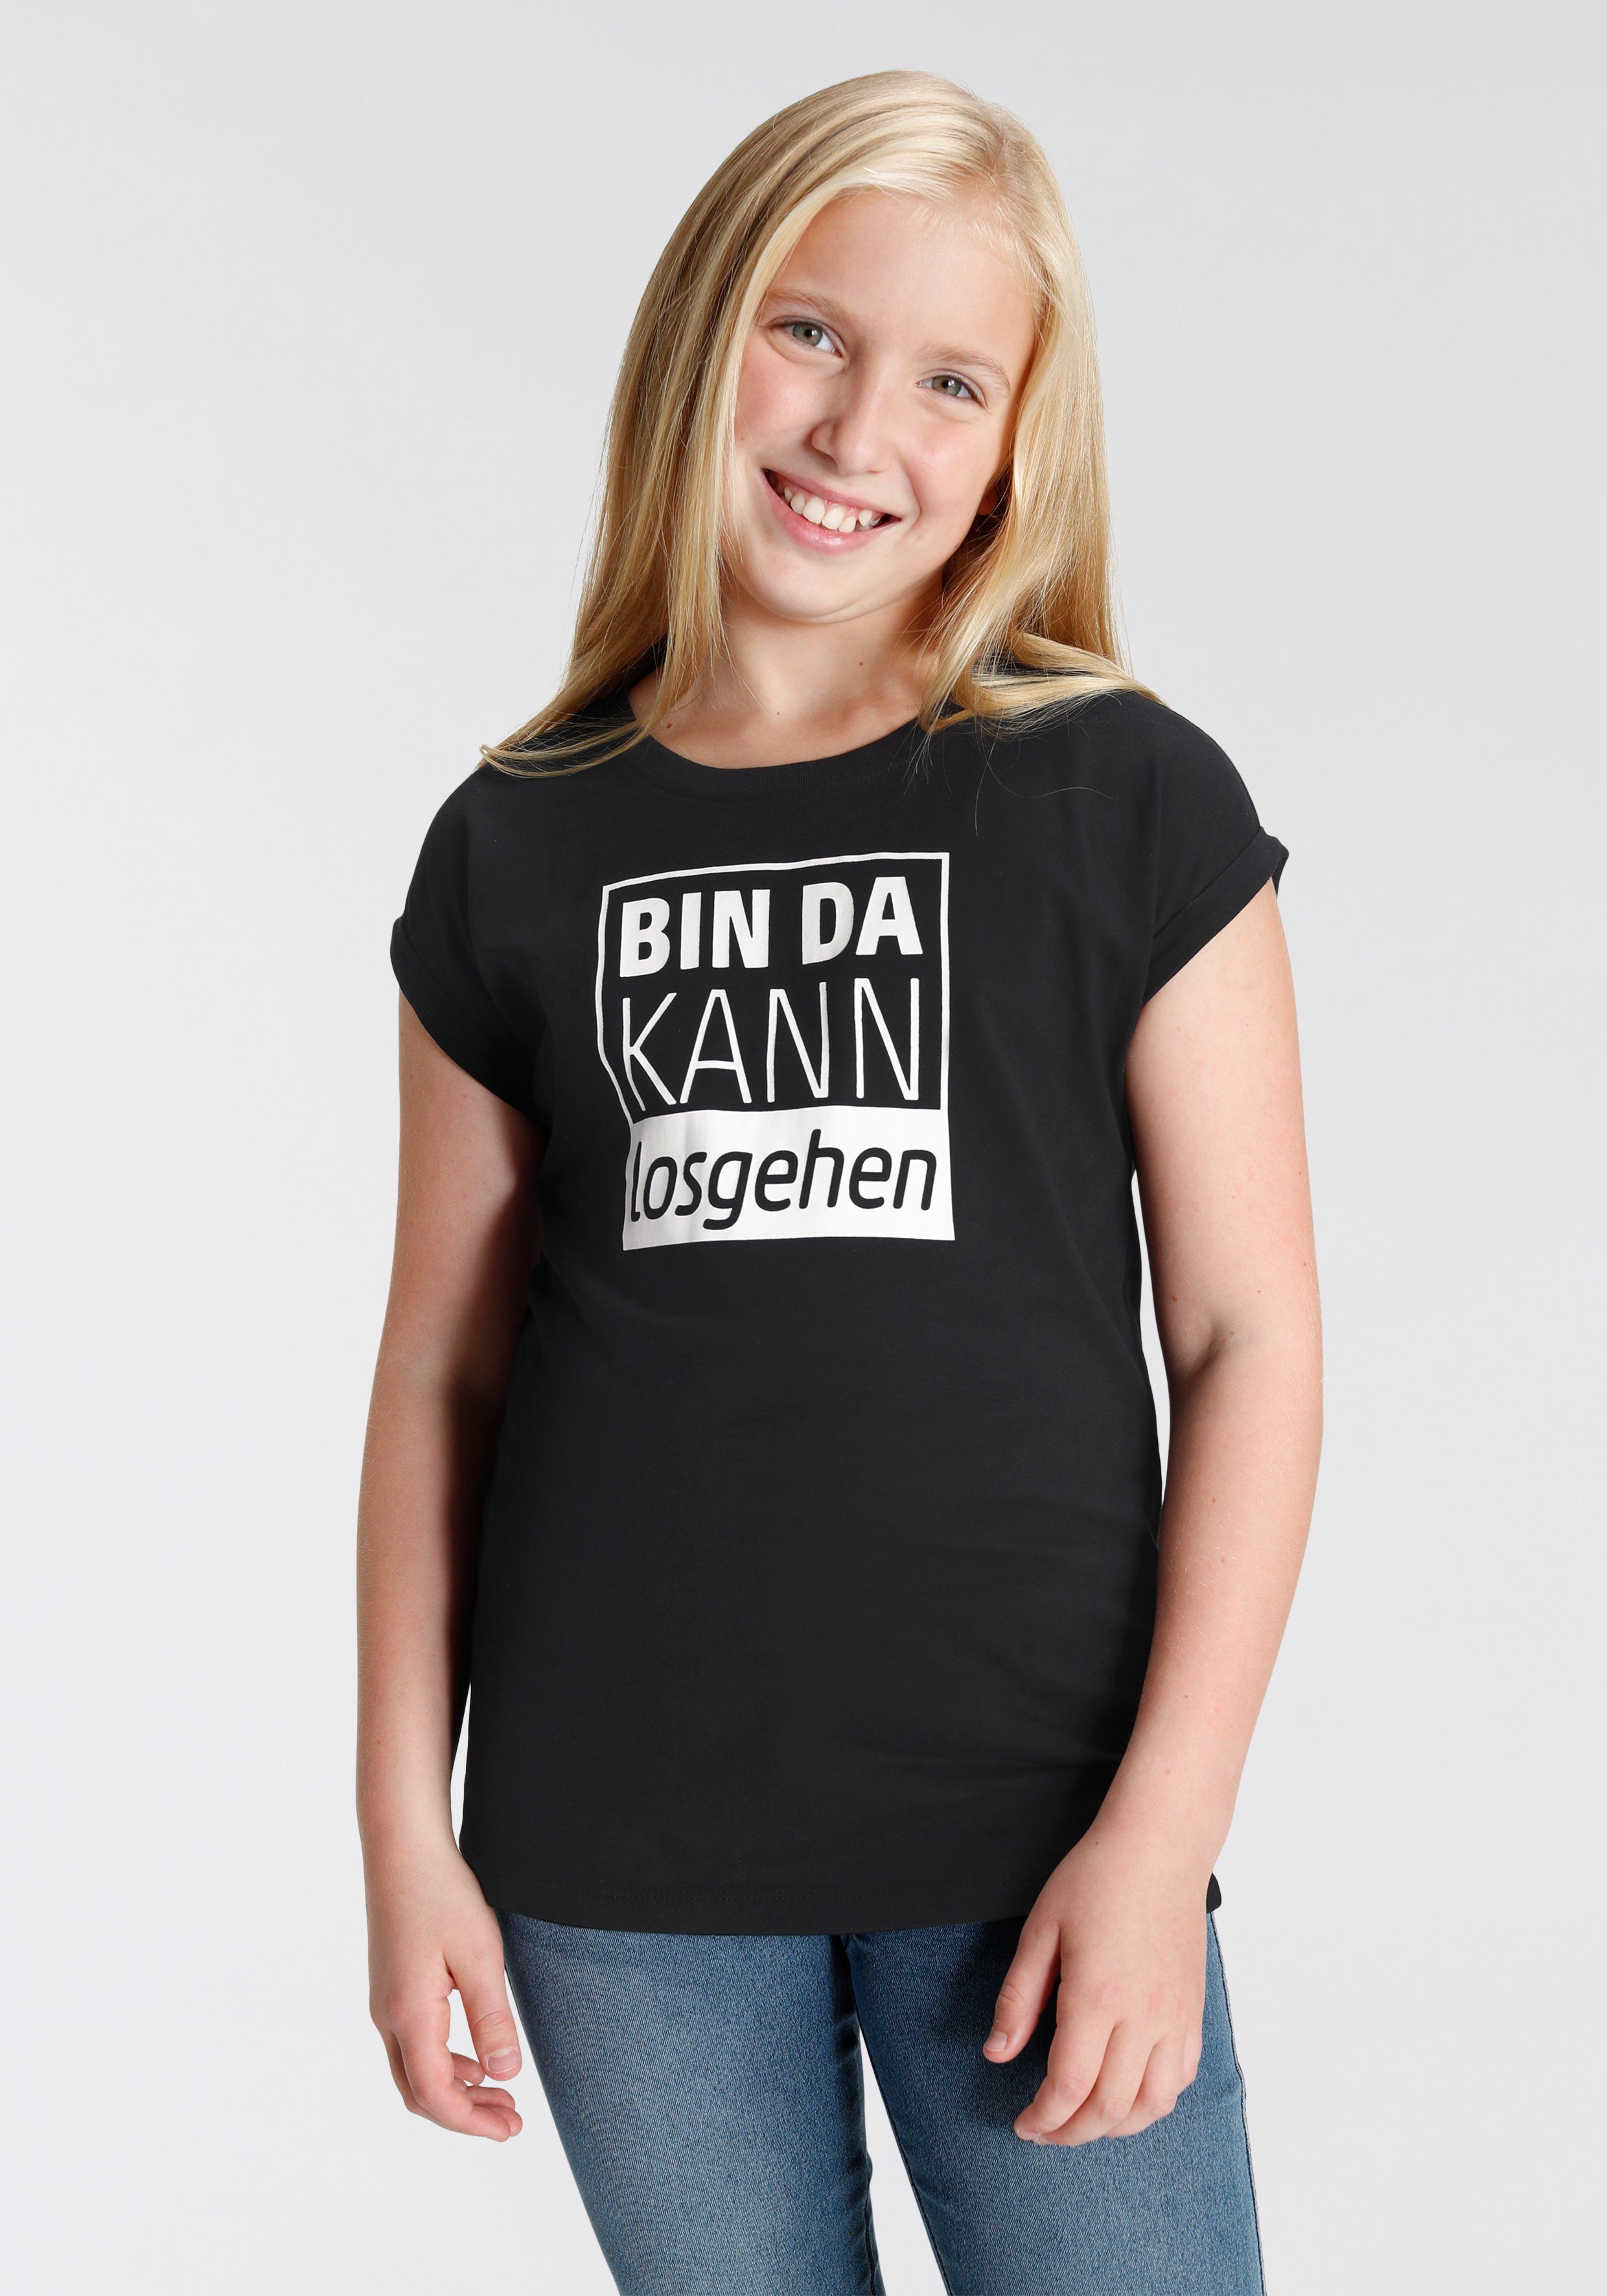 Bin online OTTO shop kann da wijd, losgehen T-shirt | casual model KIDSWORLD